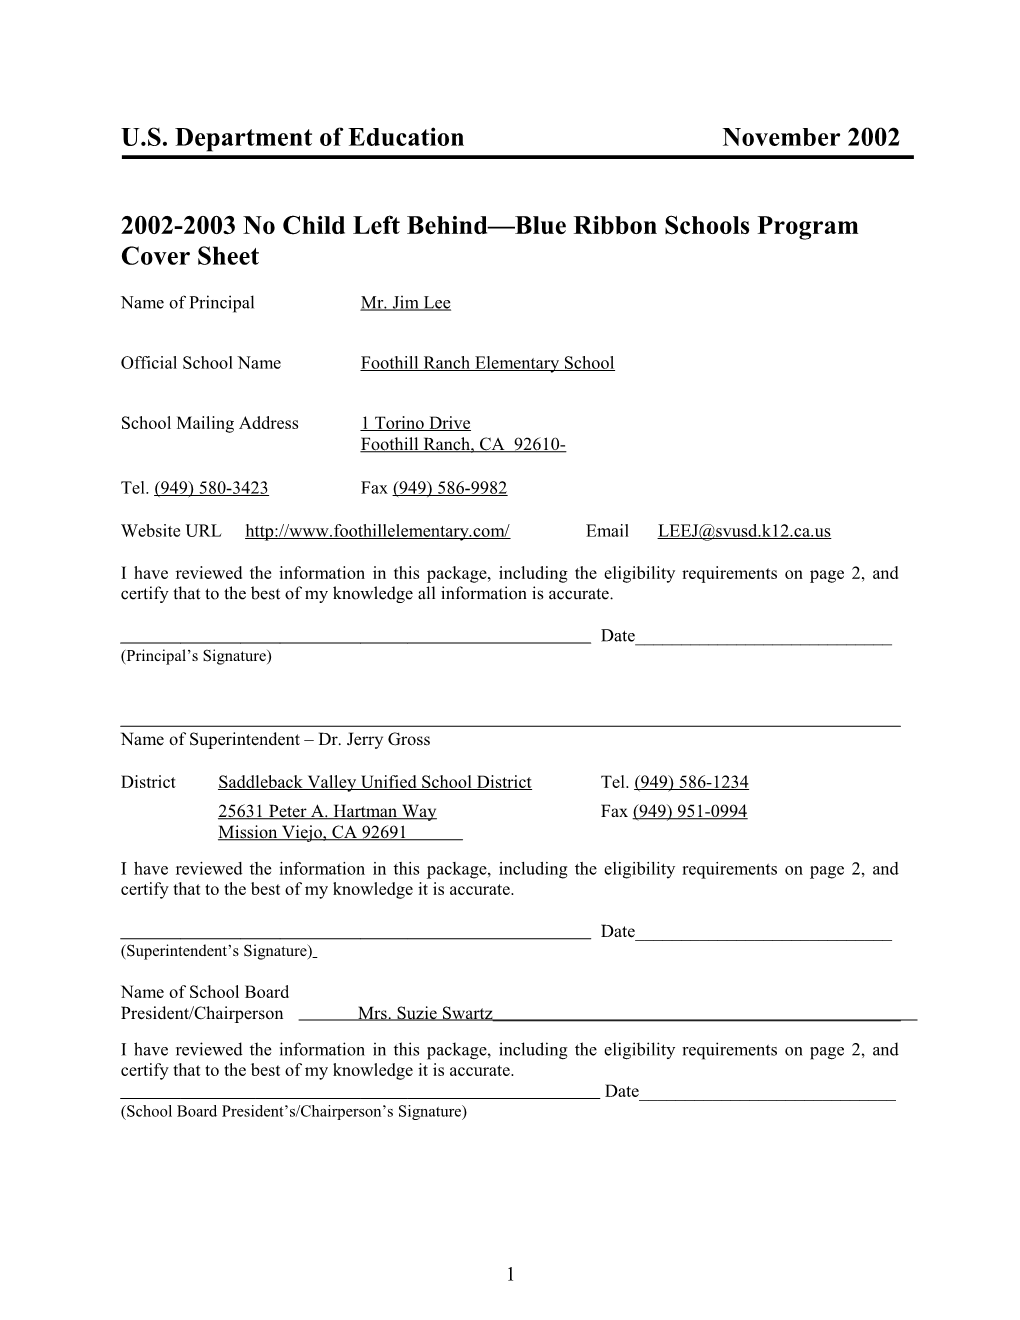 Foothill Ranch Elementary School 2003 No Child Left Behind-Blue Ribbon School (Msword)